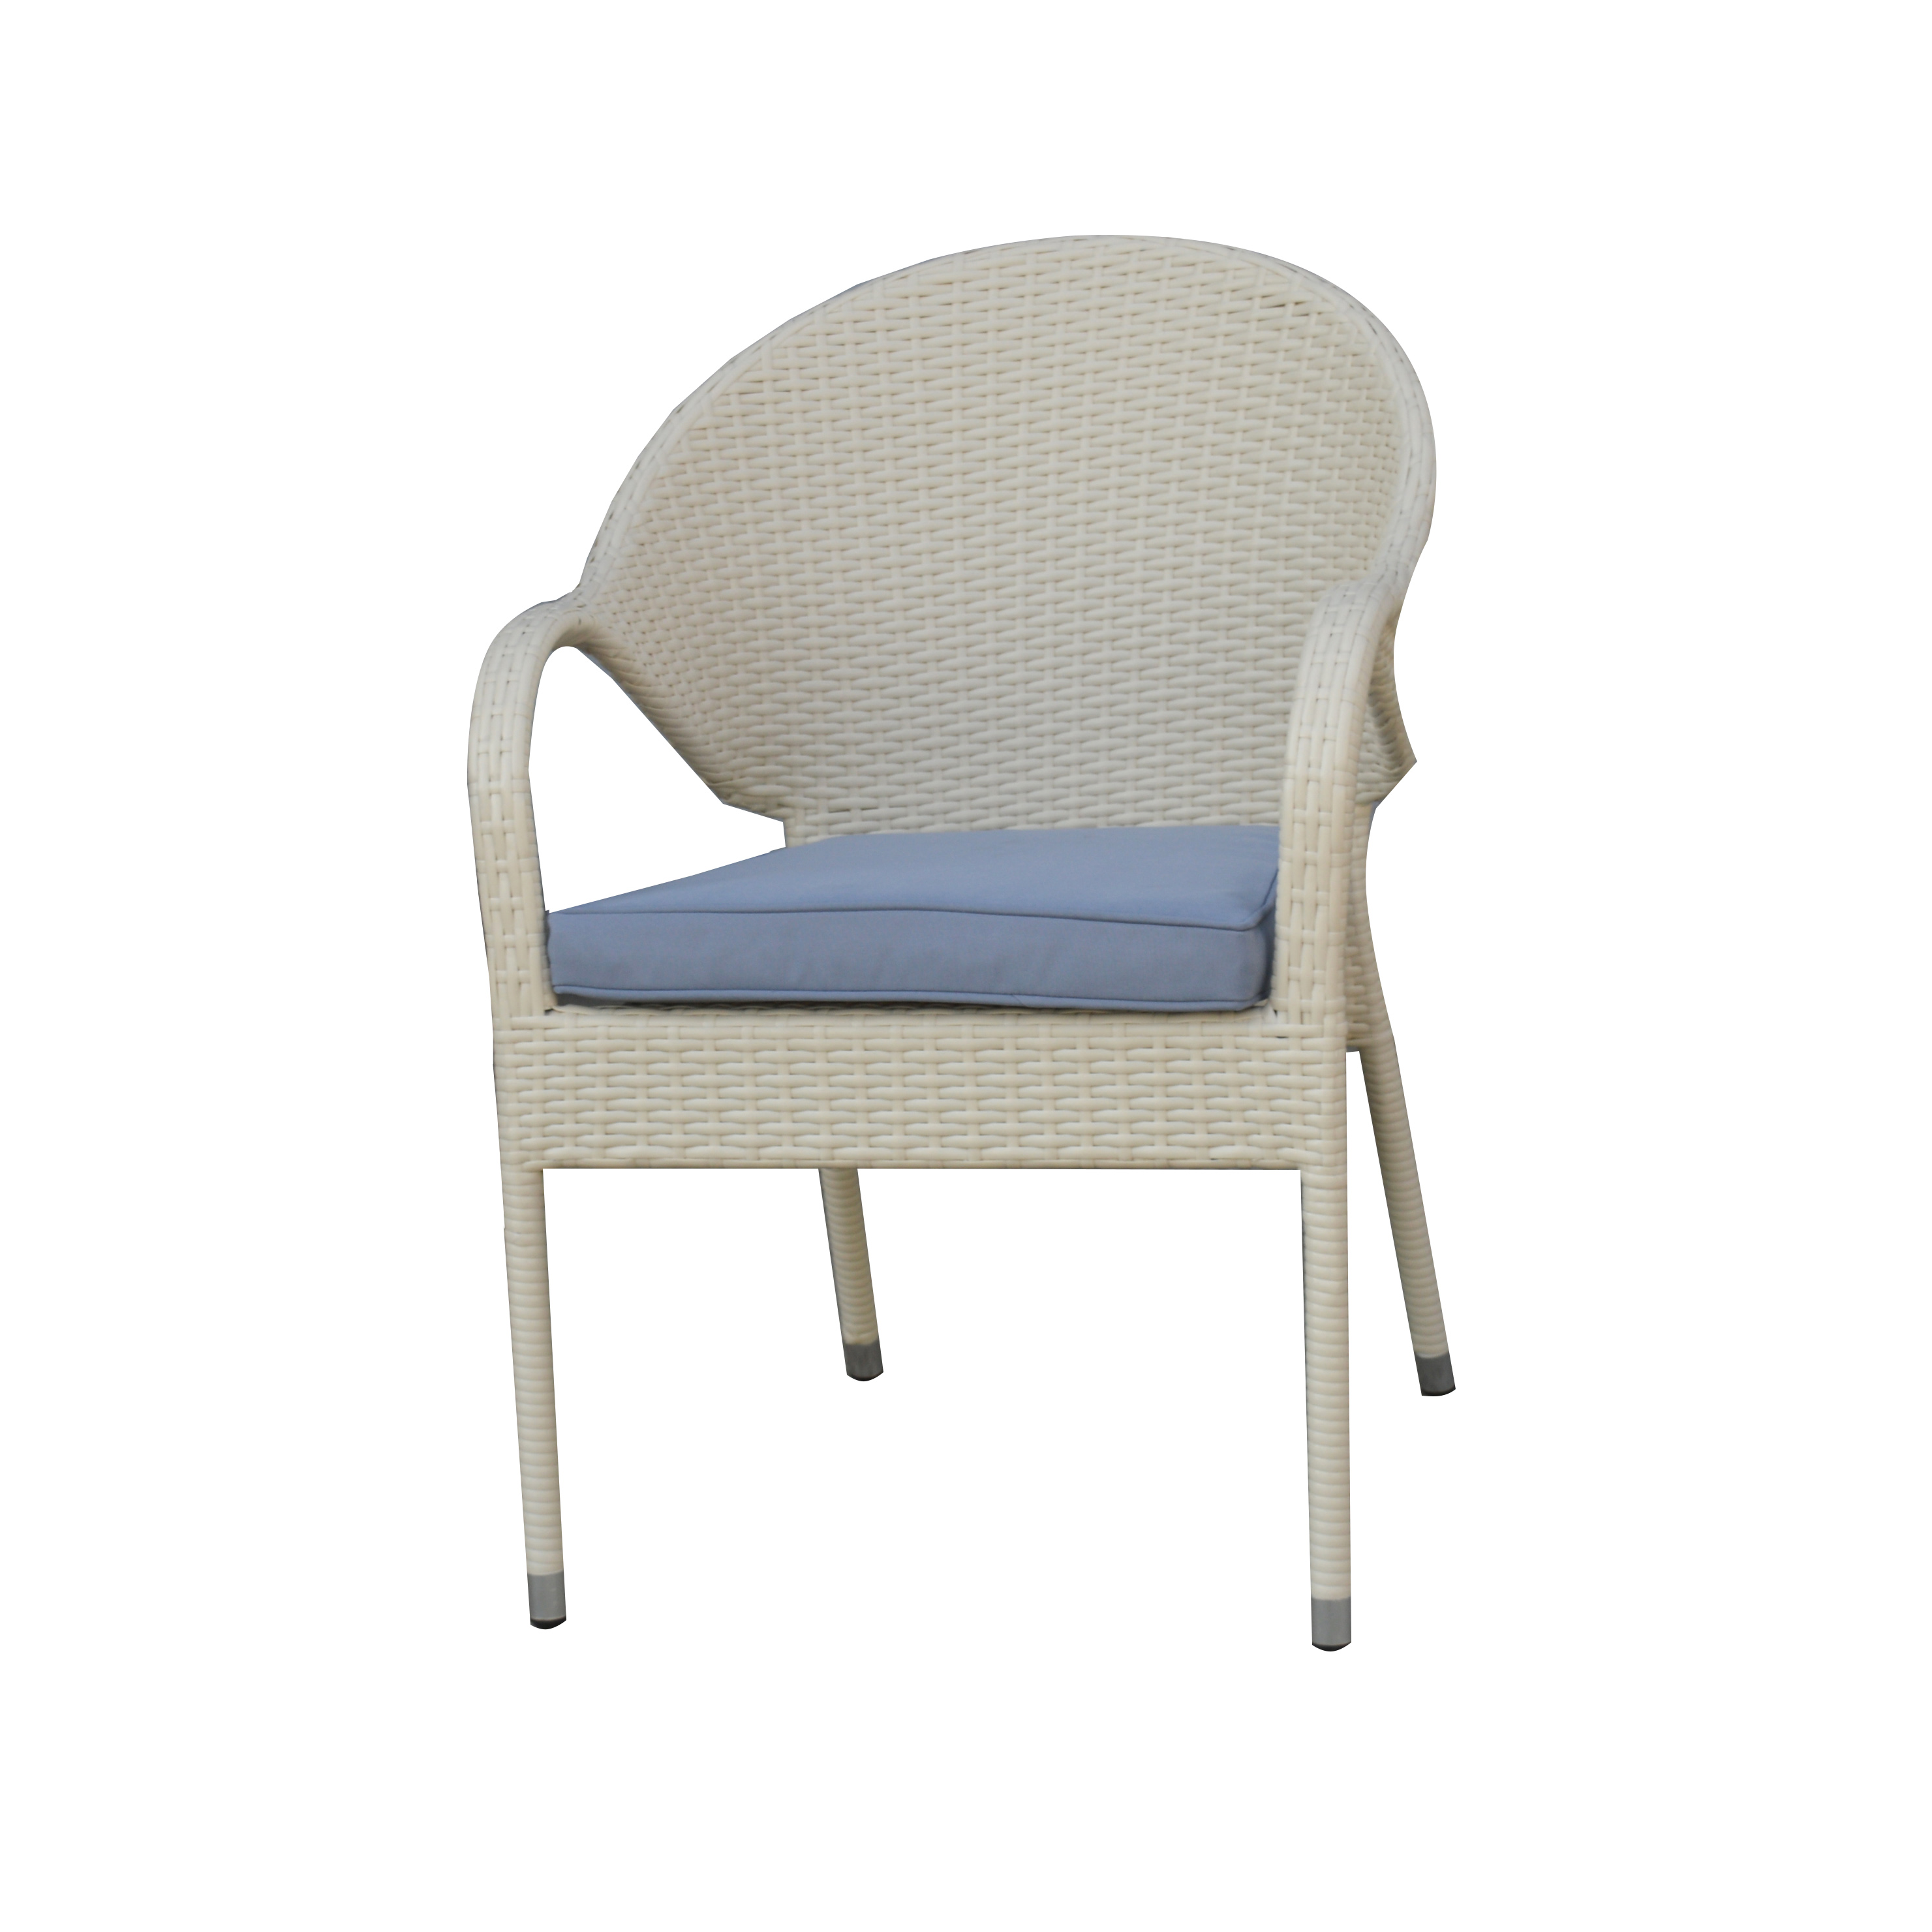 Uplion Patio Furniture Trend Popular Outdoor Aluminum Rattan Armchair Garden Rattan Chair